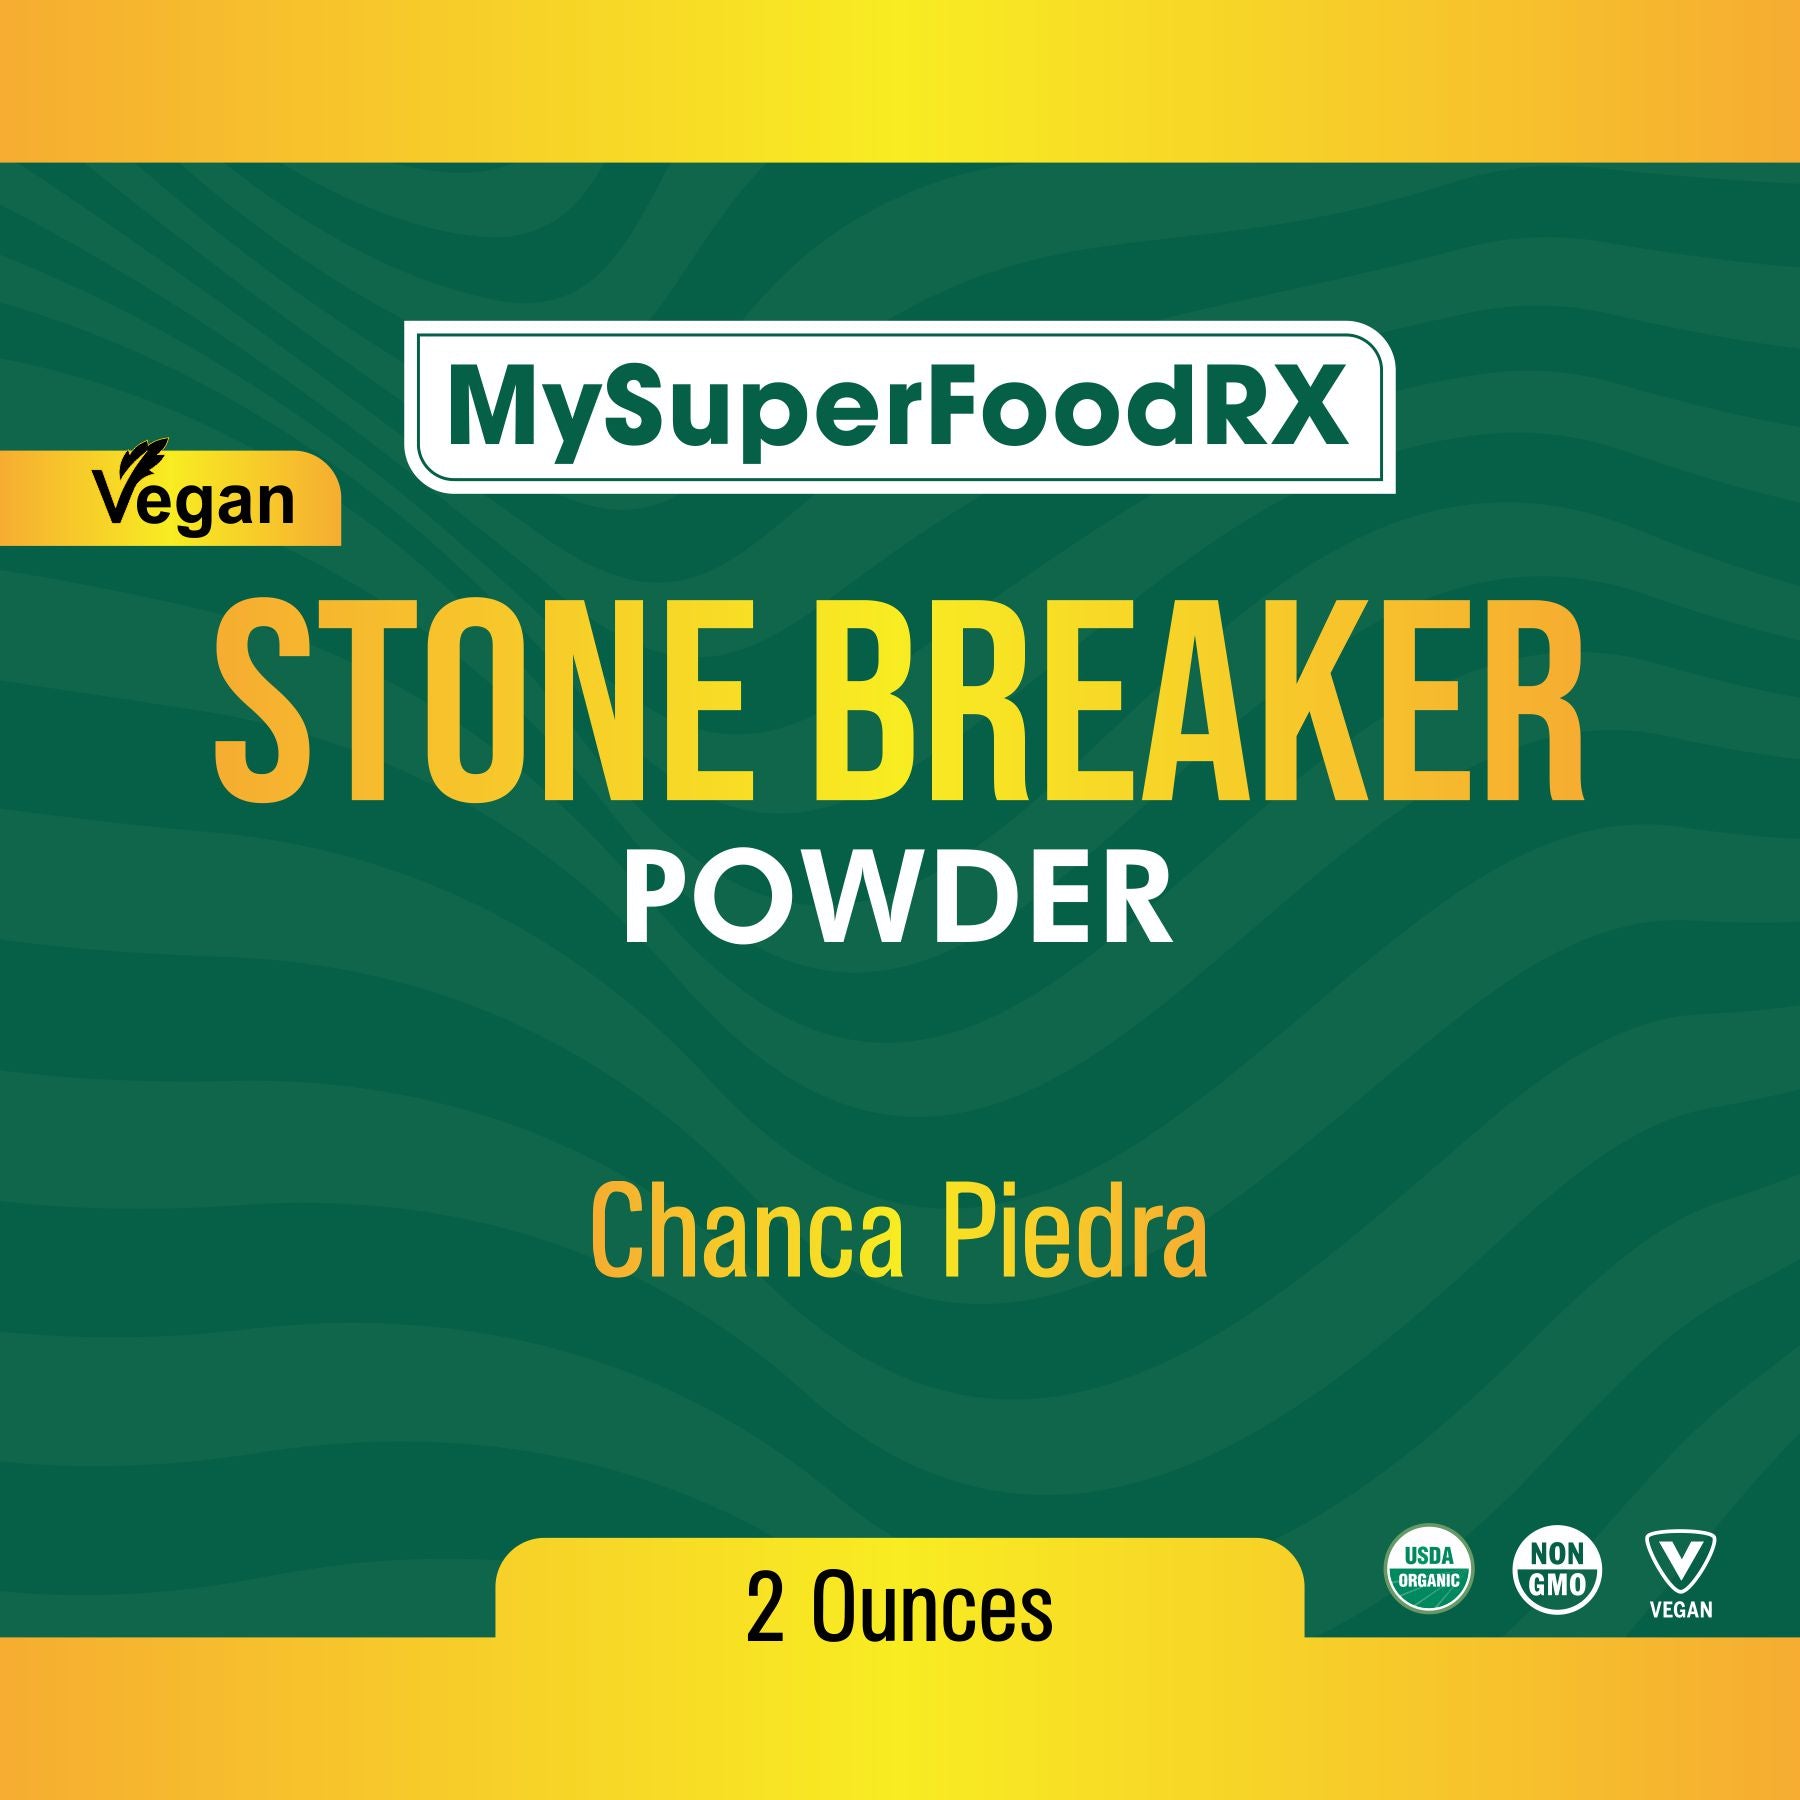 a label for stone breaker powder